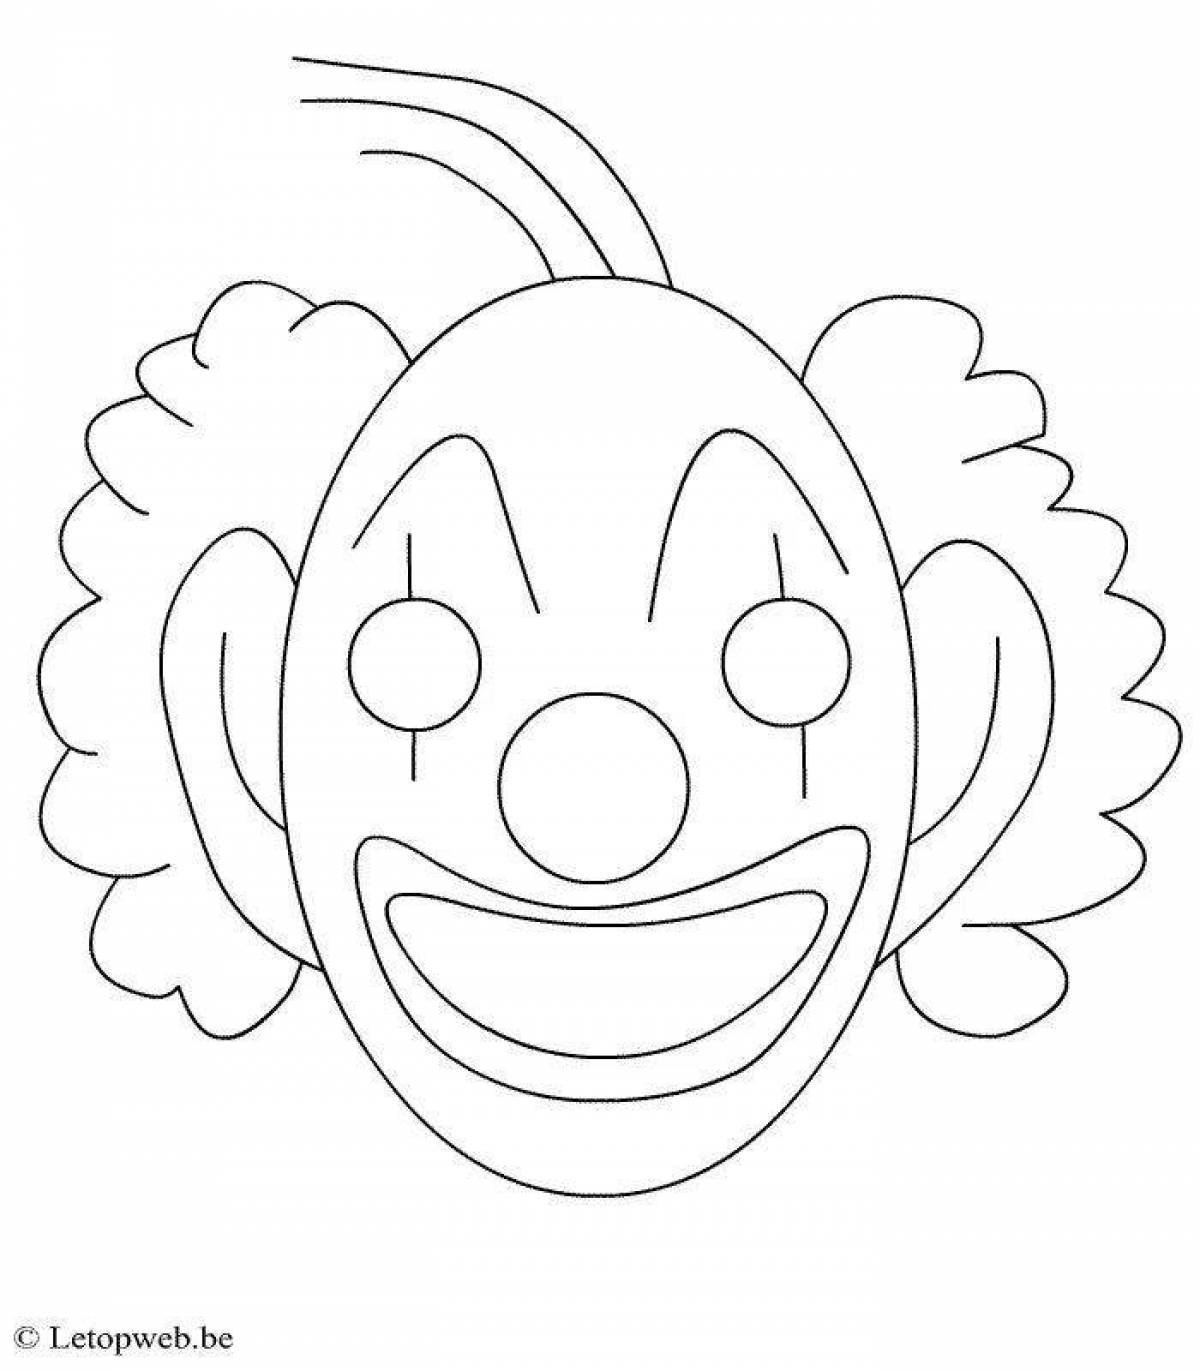 Шаблон маски клоуна распечатать. Клоун раскраска. Голова клоуна раскраска. Рисование маска клоуна.